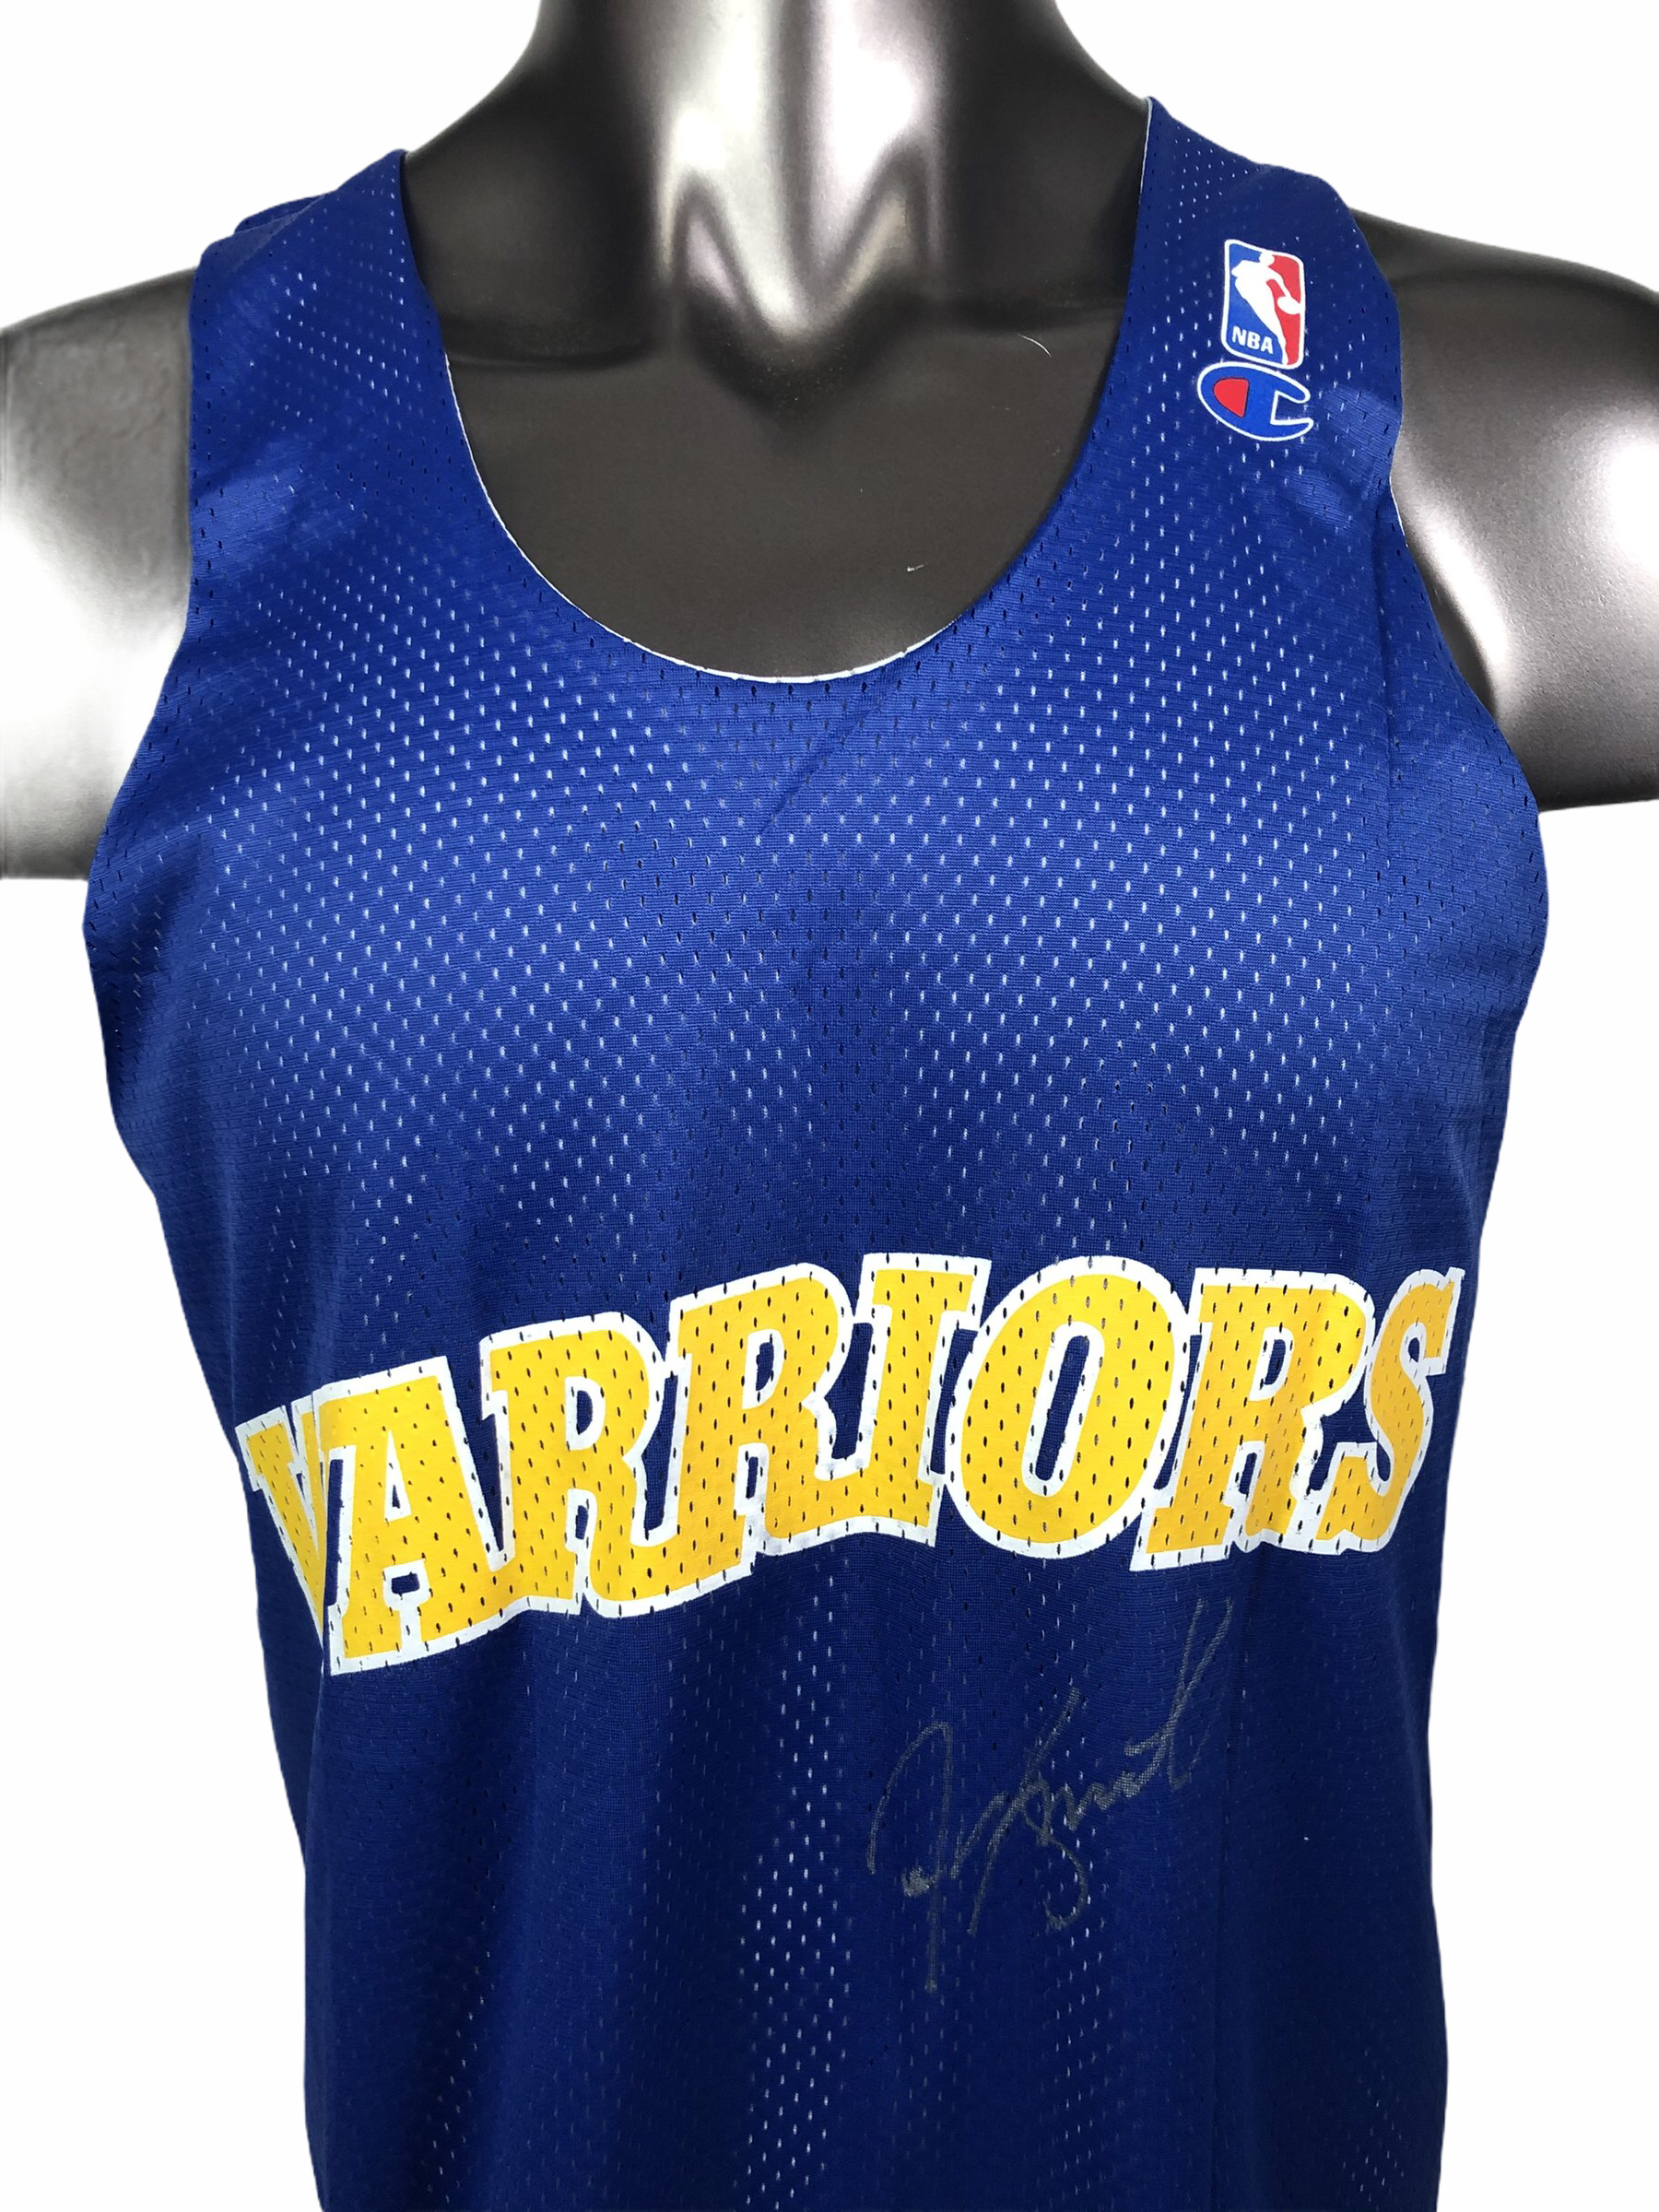 Golden State Warriors Basketball Jersey Adidas 3XL +2 Ellis Sewn Logo Stains